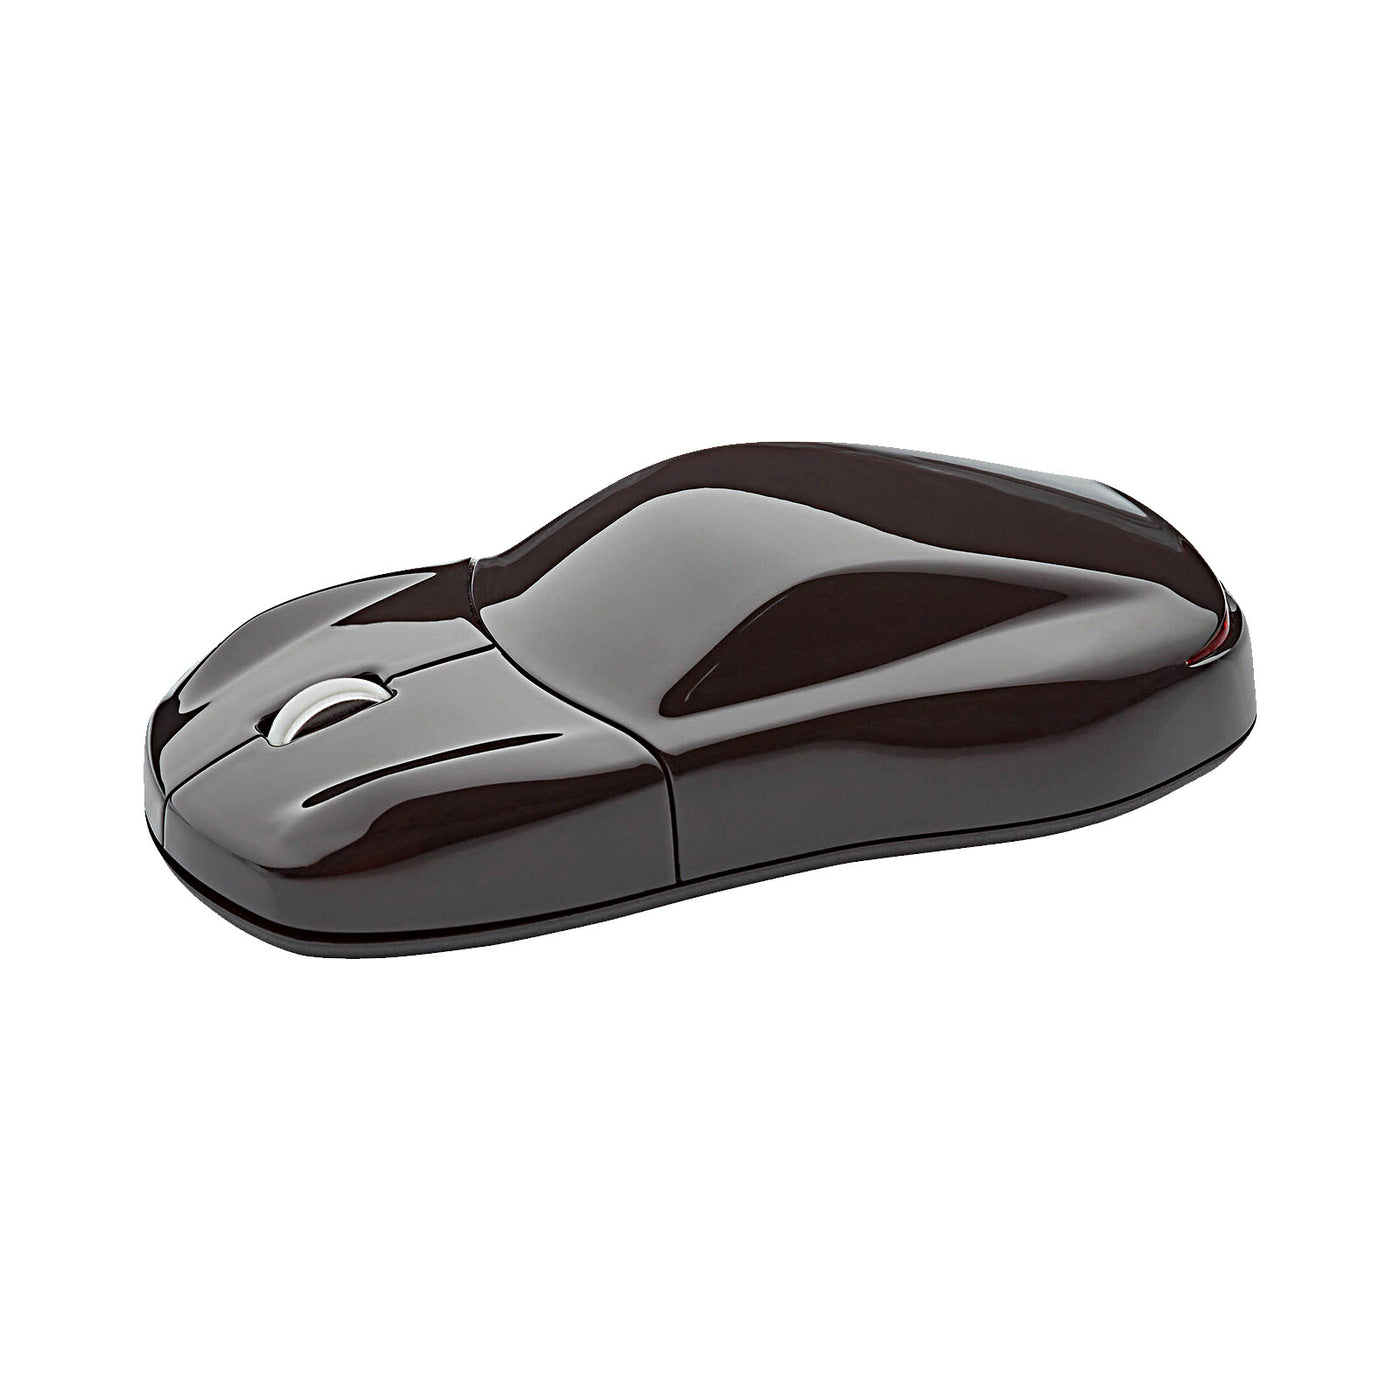 Porsche Wireless Computer Mouse - Black